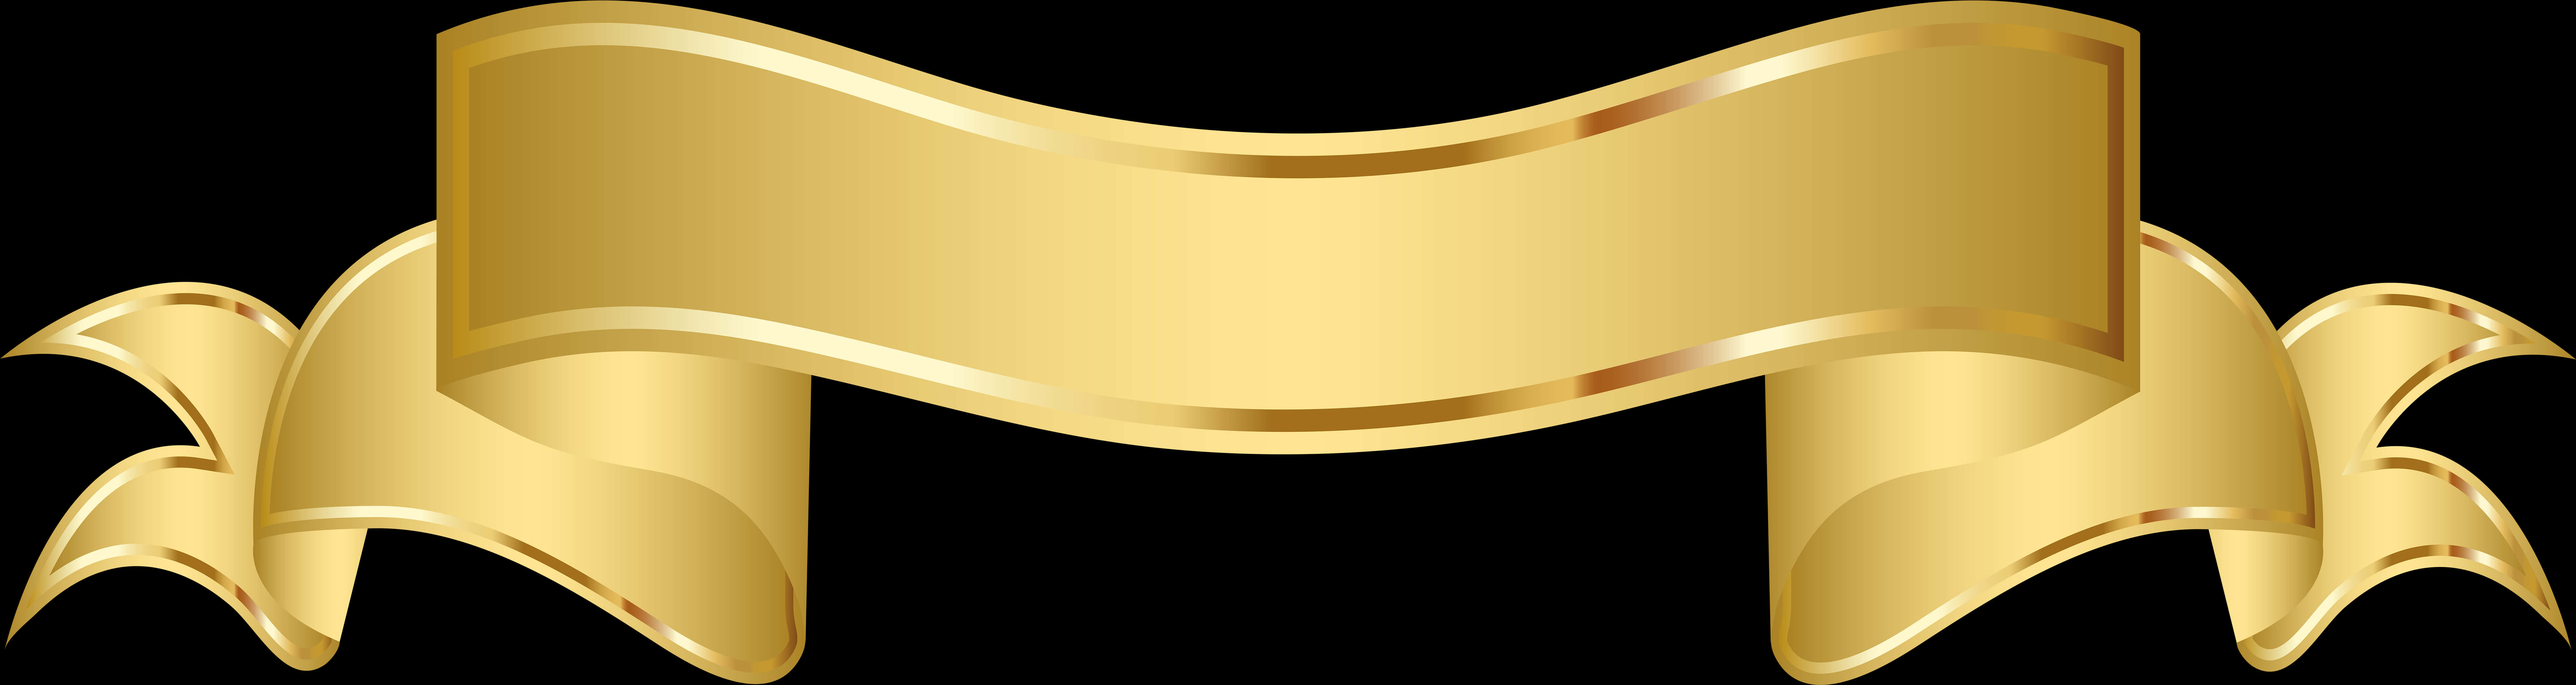 Golden Banner Ribbon Graphic PNG image